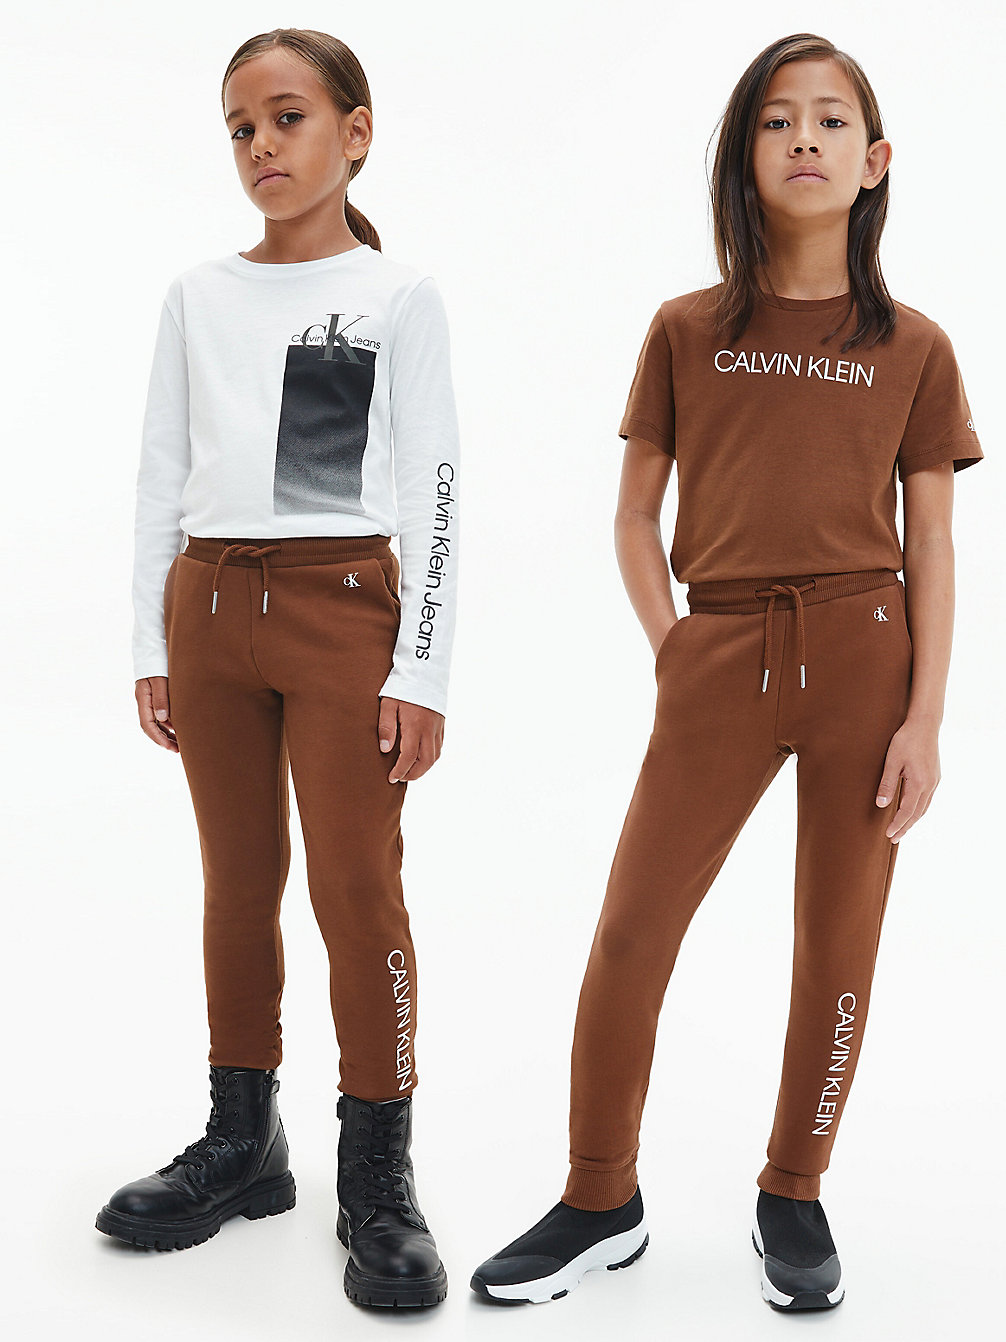 MILK CHOCOLATE Schmale Unisex-Jogginghose undefined kids unisex Calvin Klein